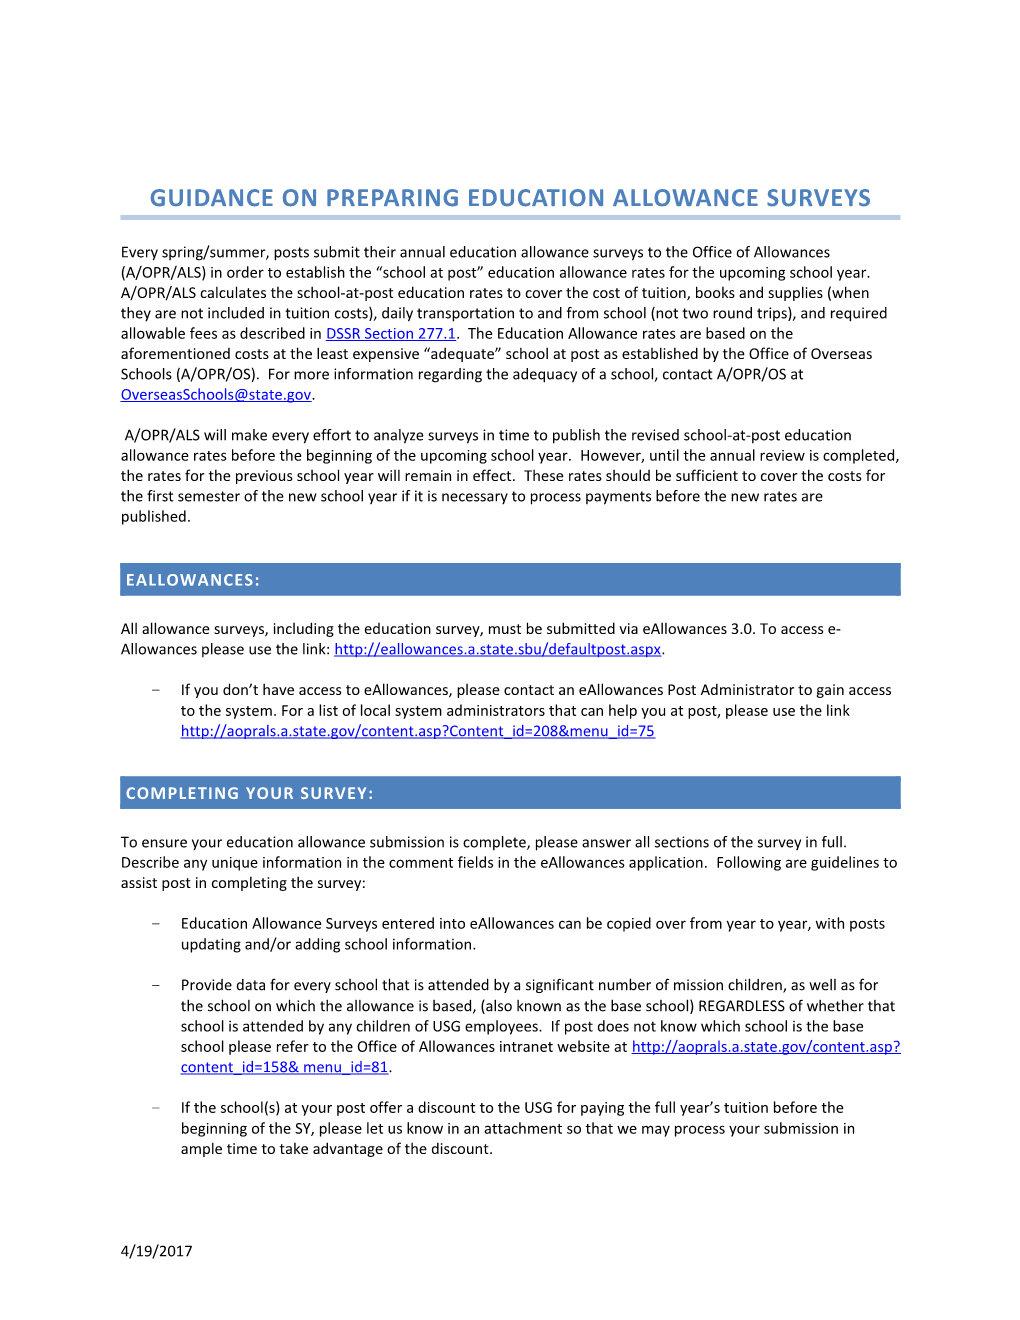 Guidance on Preparing Education Allowance Surveys